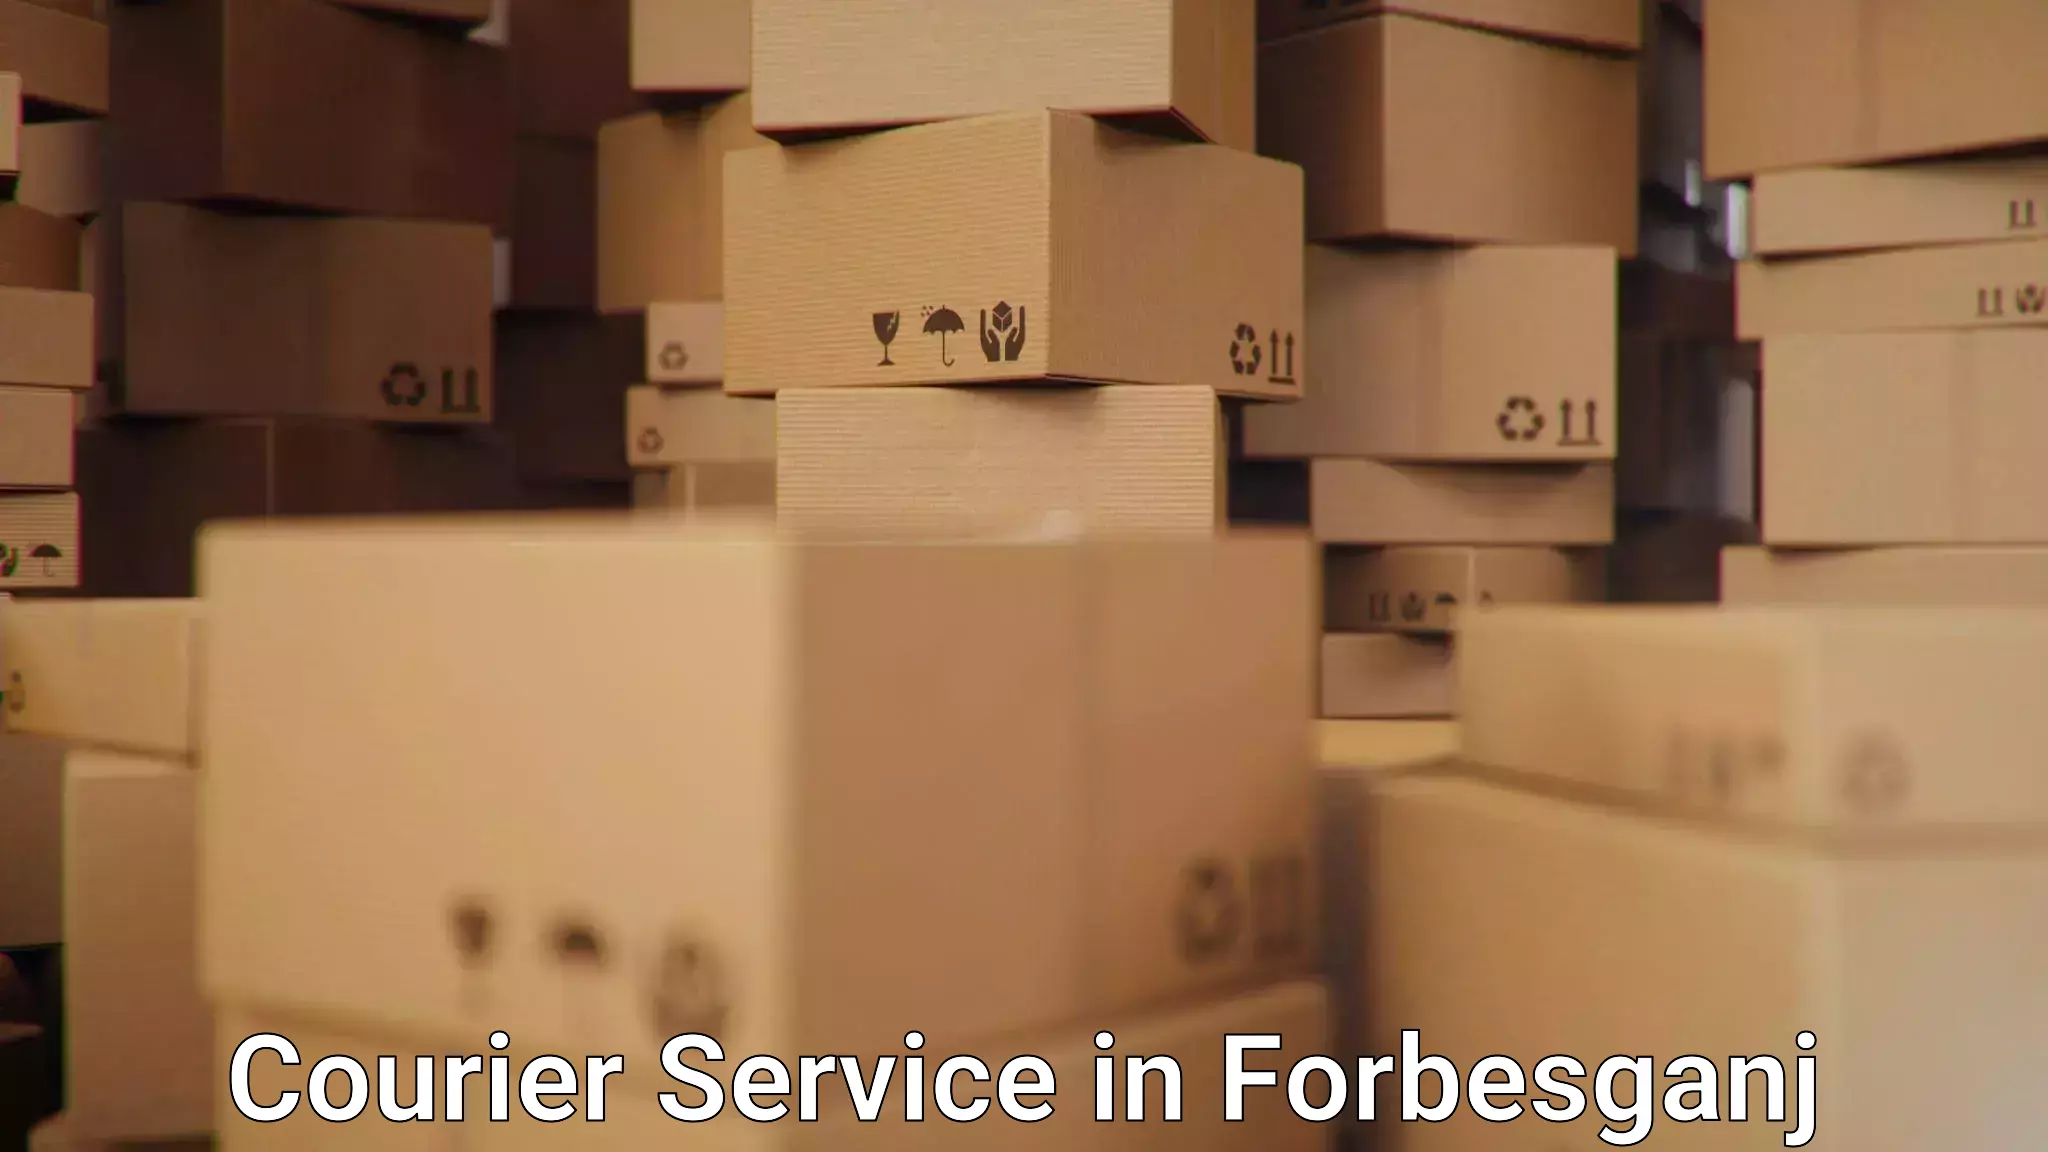 Speedy delivery service in Forbesganj